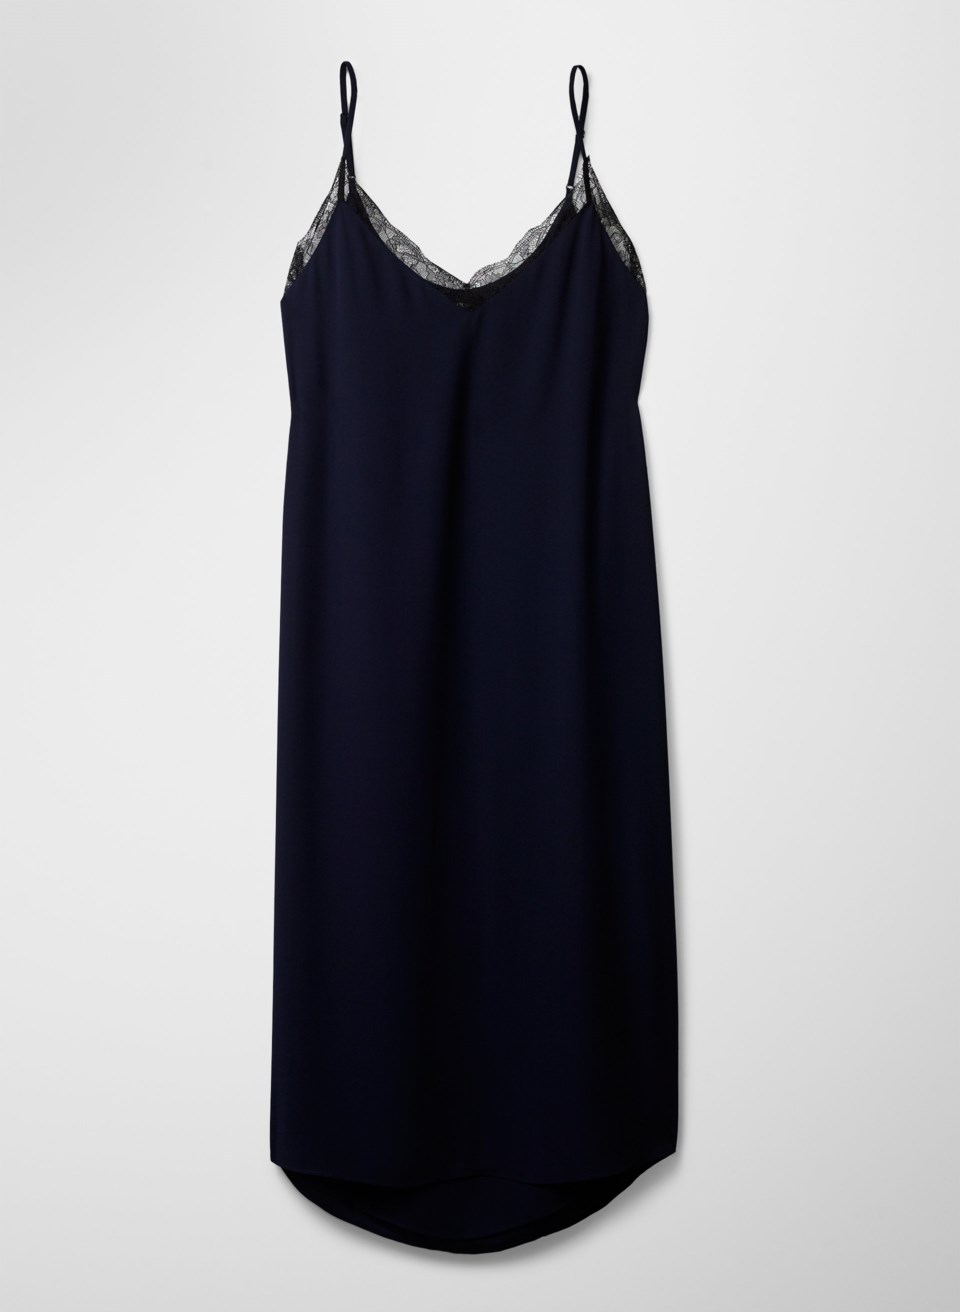 The Townsend Dress from Aritzia $48